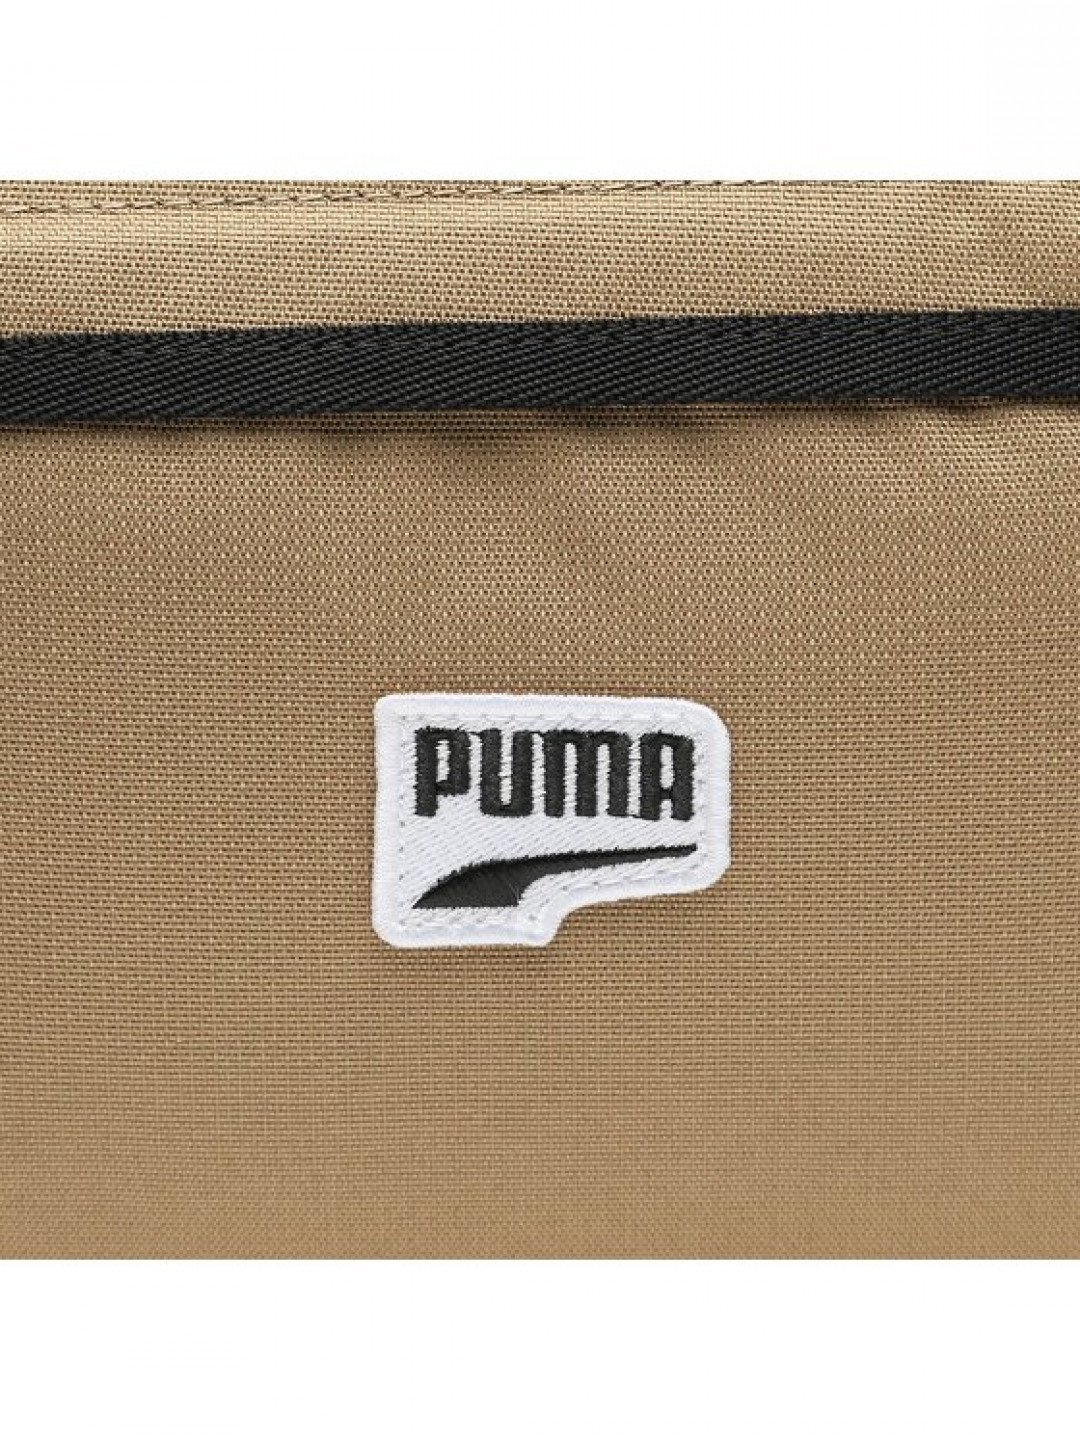 Puma Batoh Downtown Backpack Toasted 079659 04 Hnědá